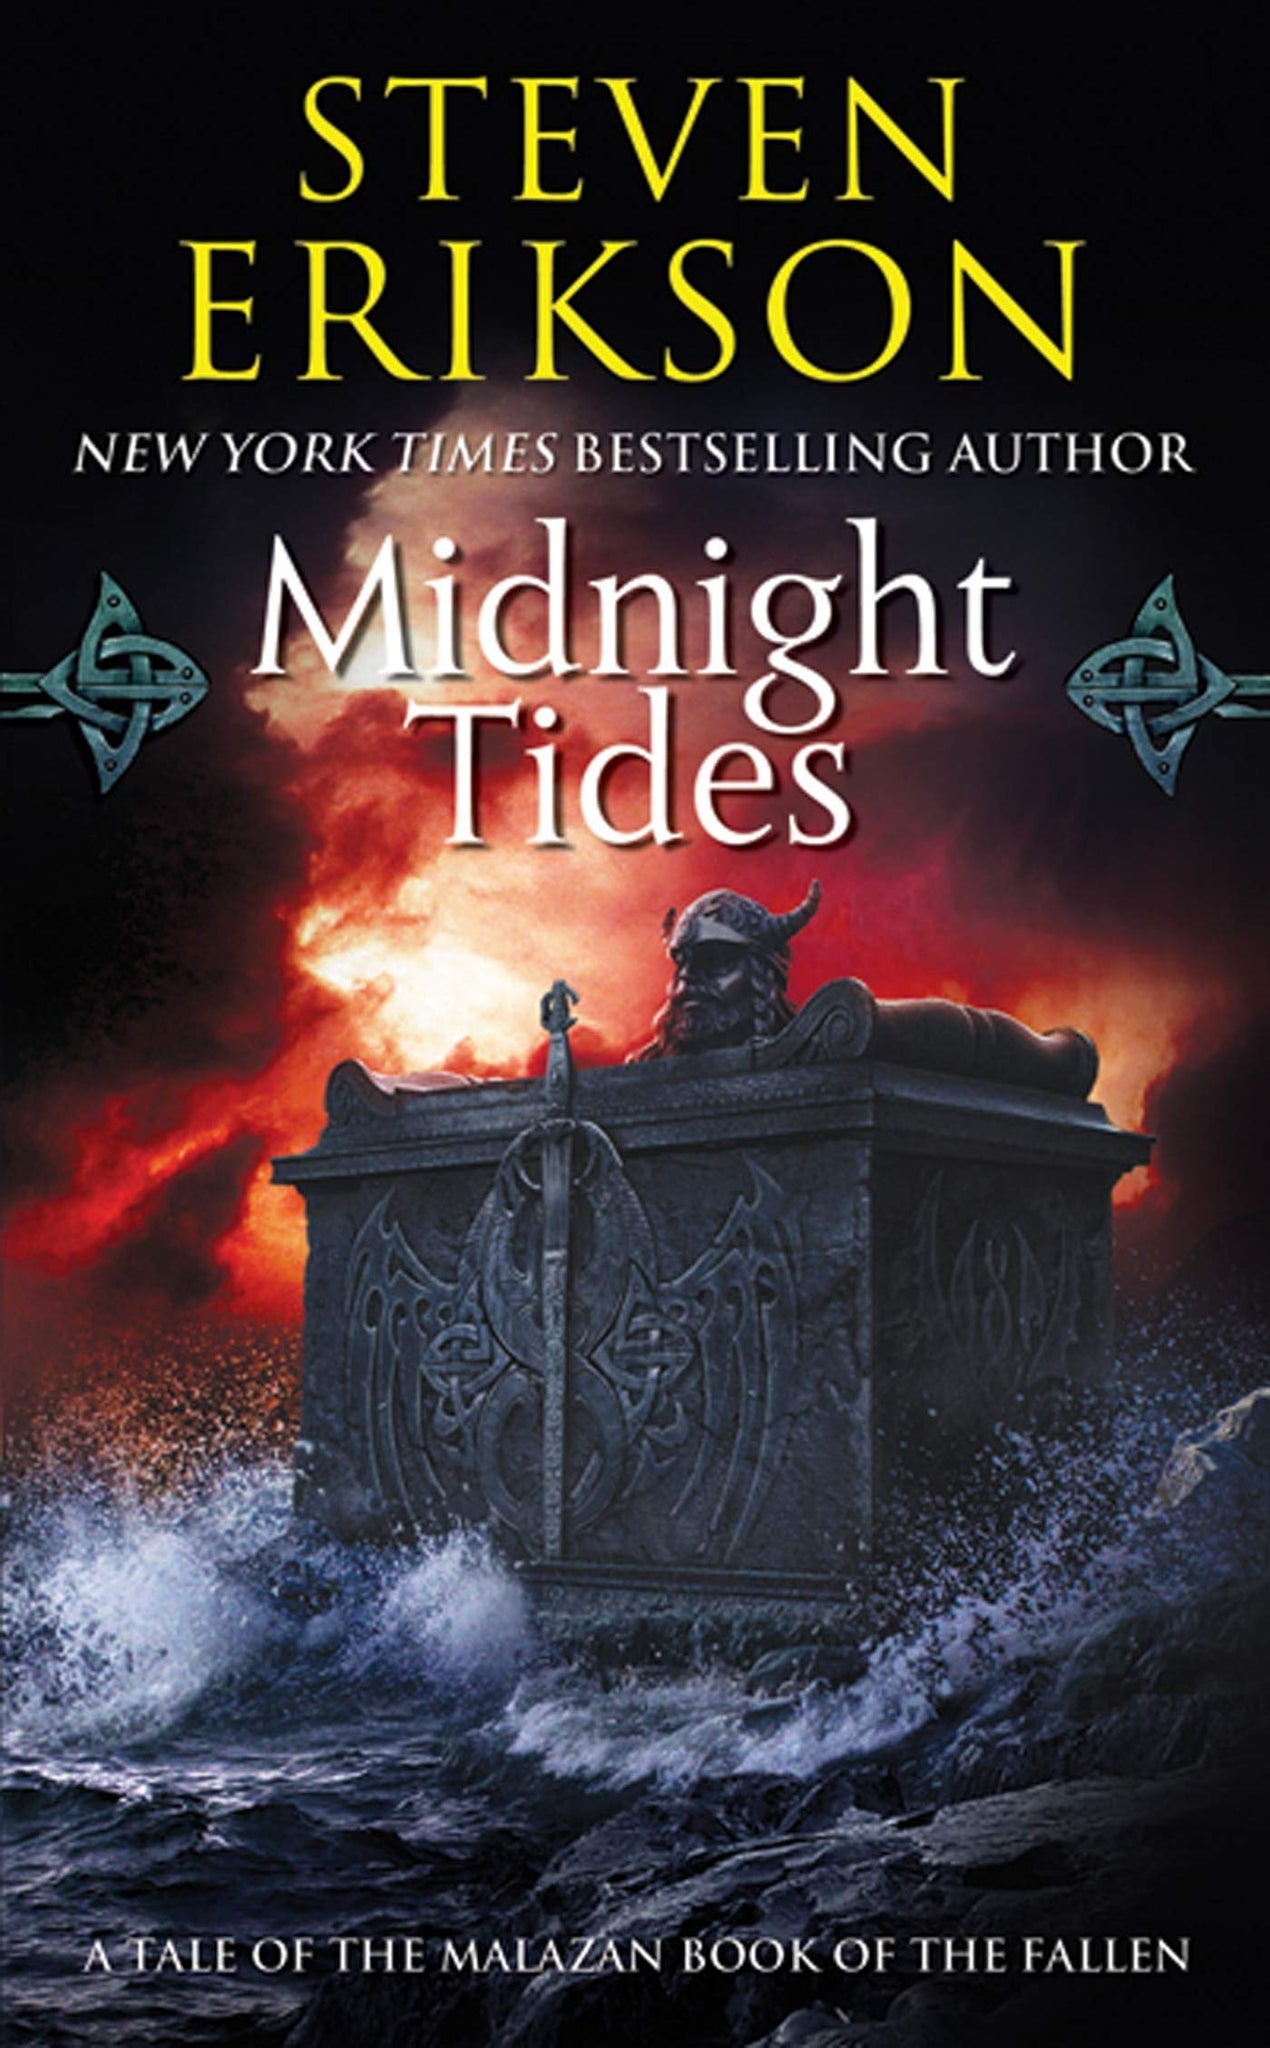 Malazan Book of the Fallen #5 : Midnight Tides by Steven Erikson